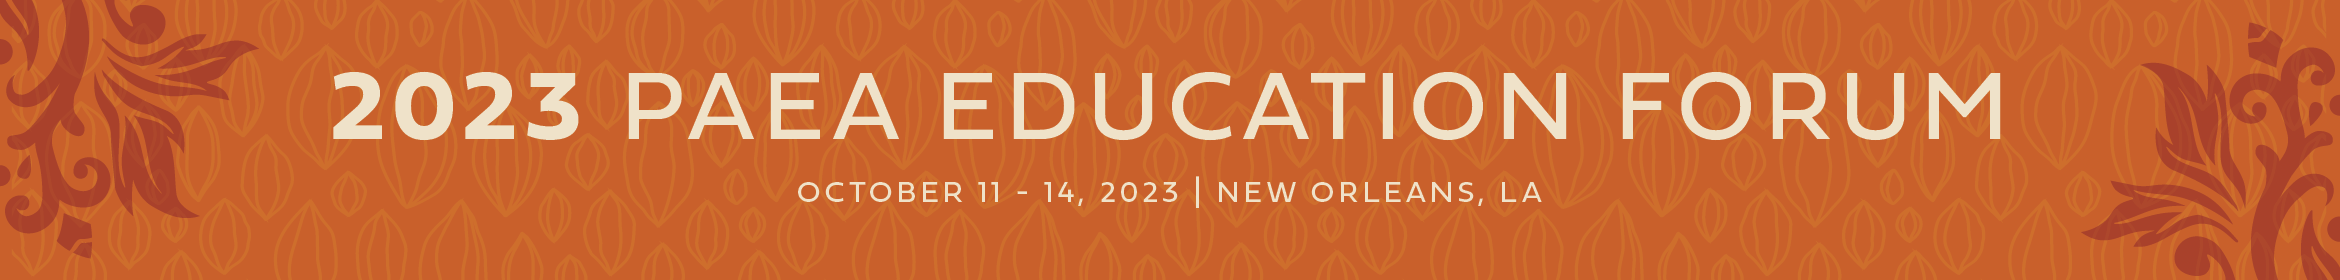 2023 Education Forum Main banner